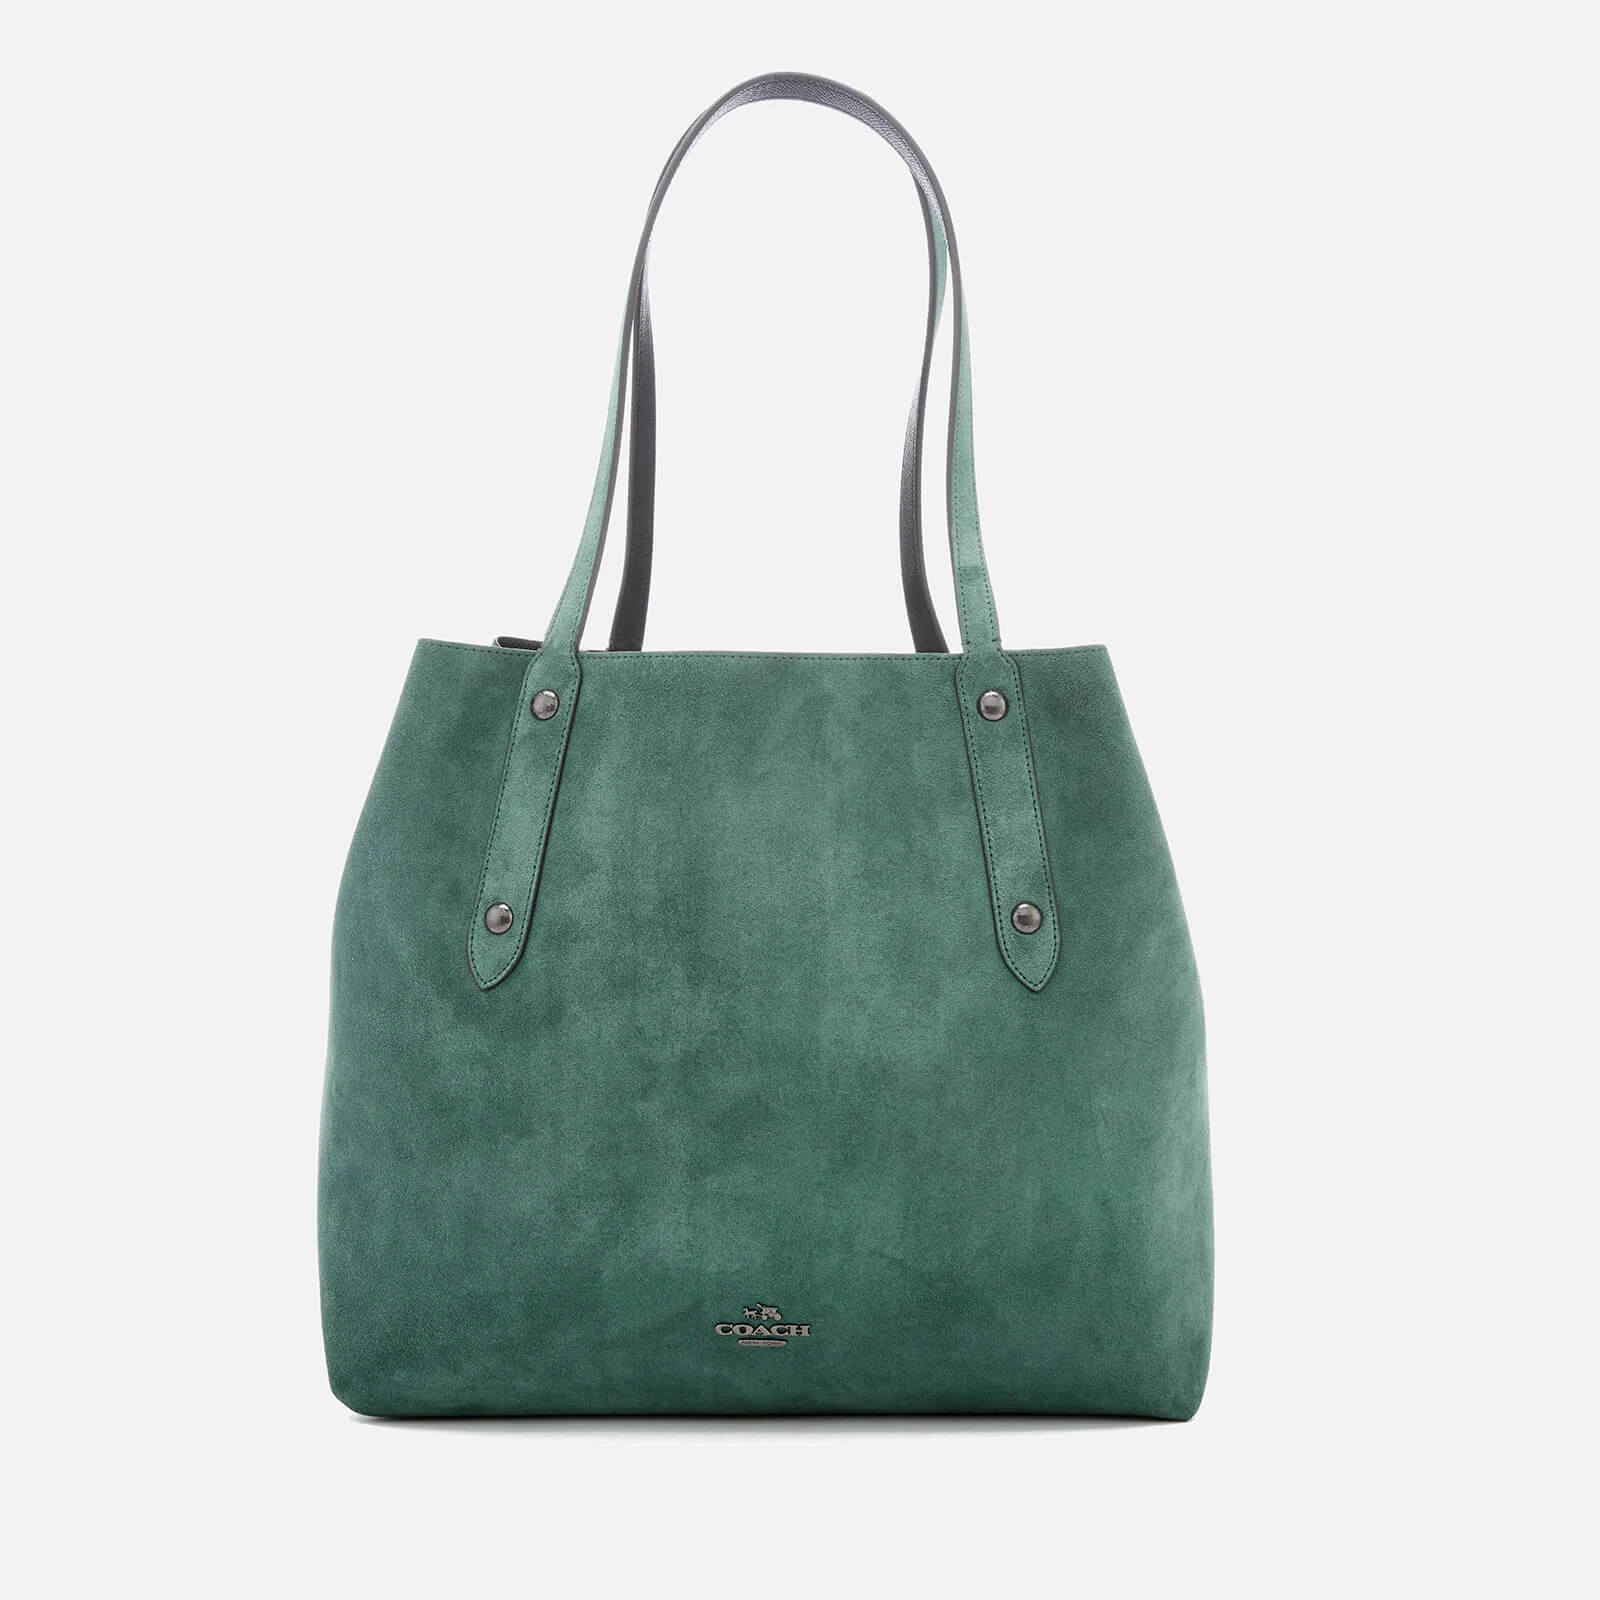 Coach Women's Large Market Tote Bag - Dark Turquoise Image 1